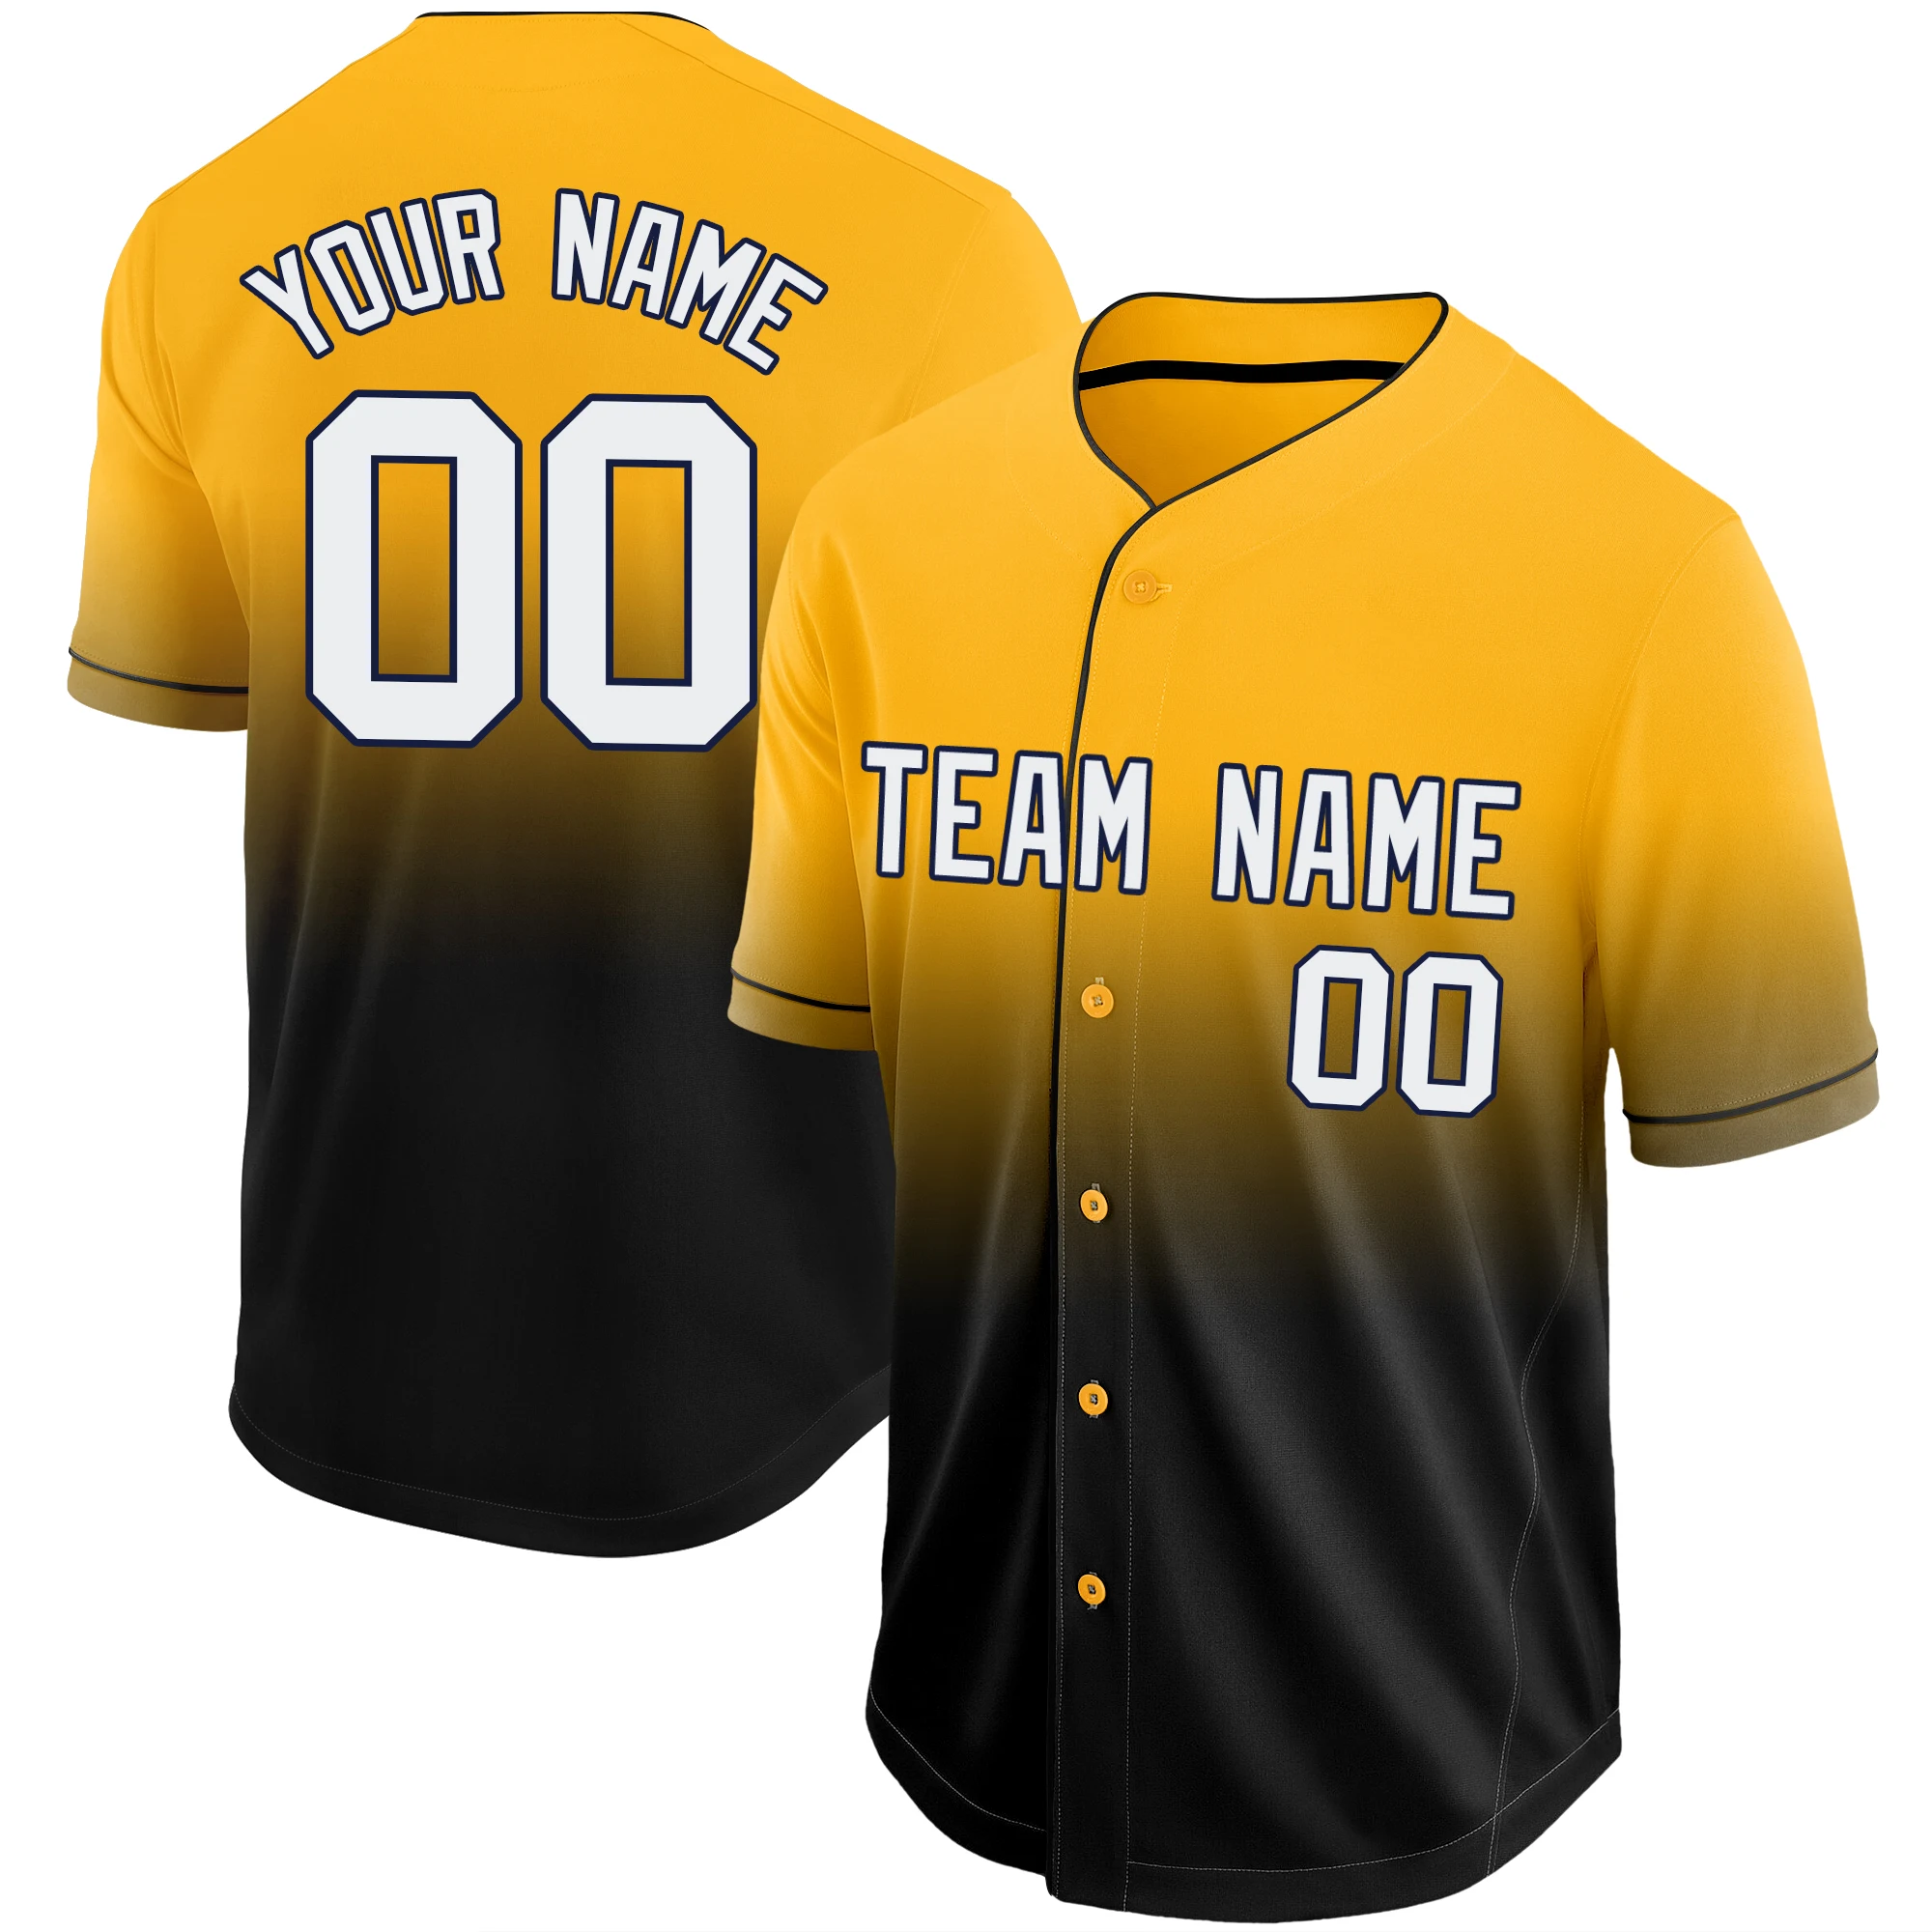 SHL Logo AIK IF Design Custom Name Yellow Baseball Jersey Shirt